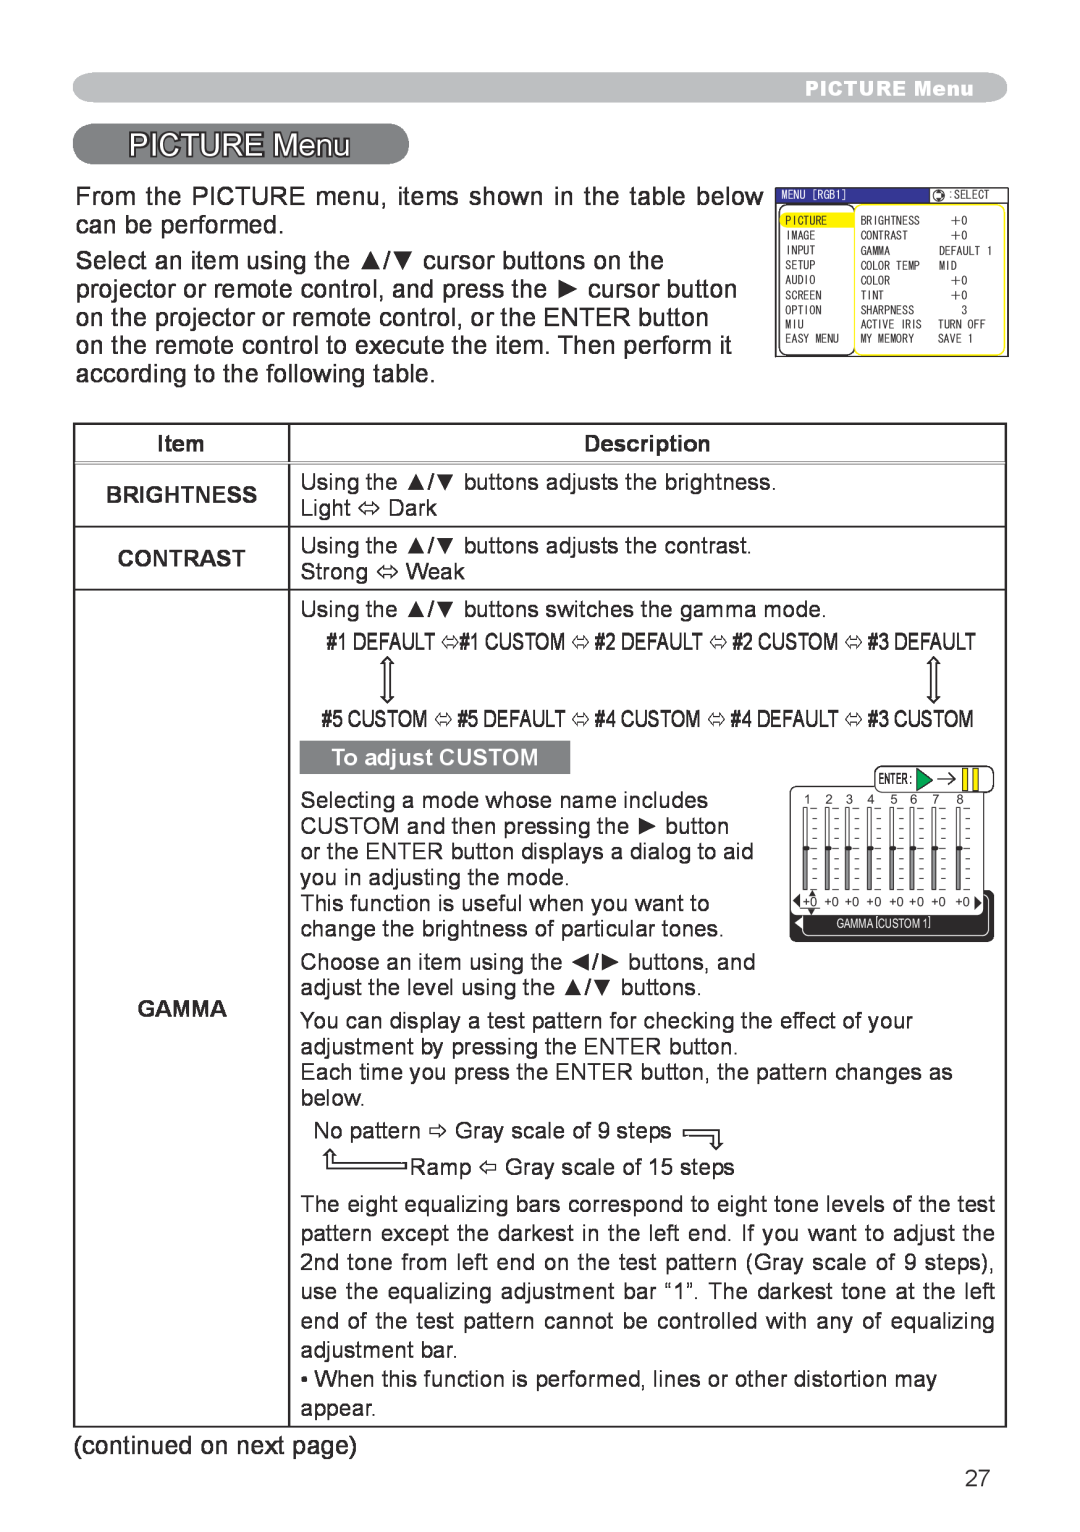 Hitachi CP-X608 user manual PICTURE Menu, Description, Brightness, Contrast, To adjust CUSTOM, Gamma 